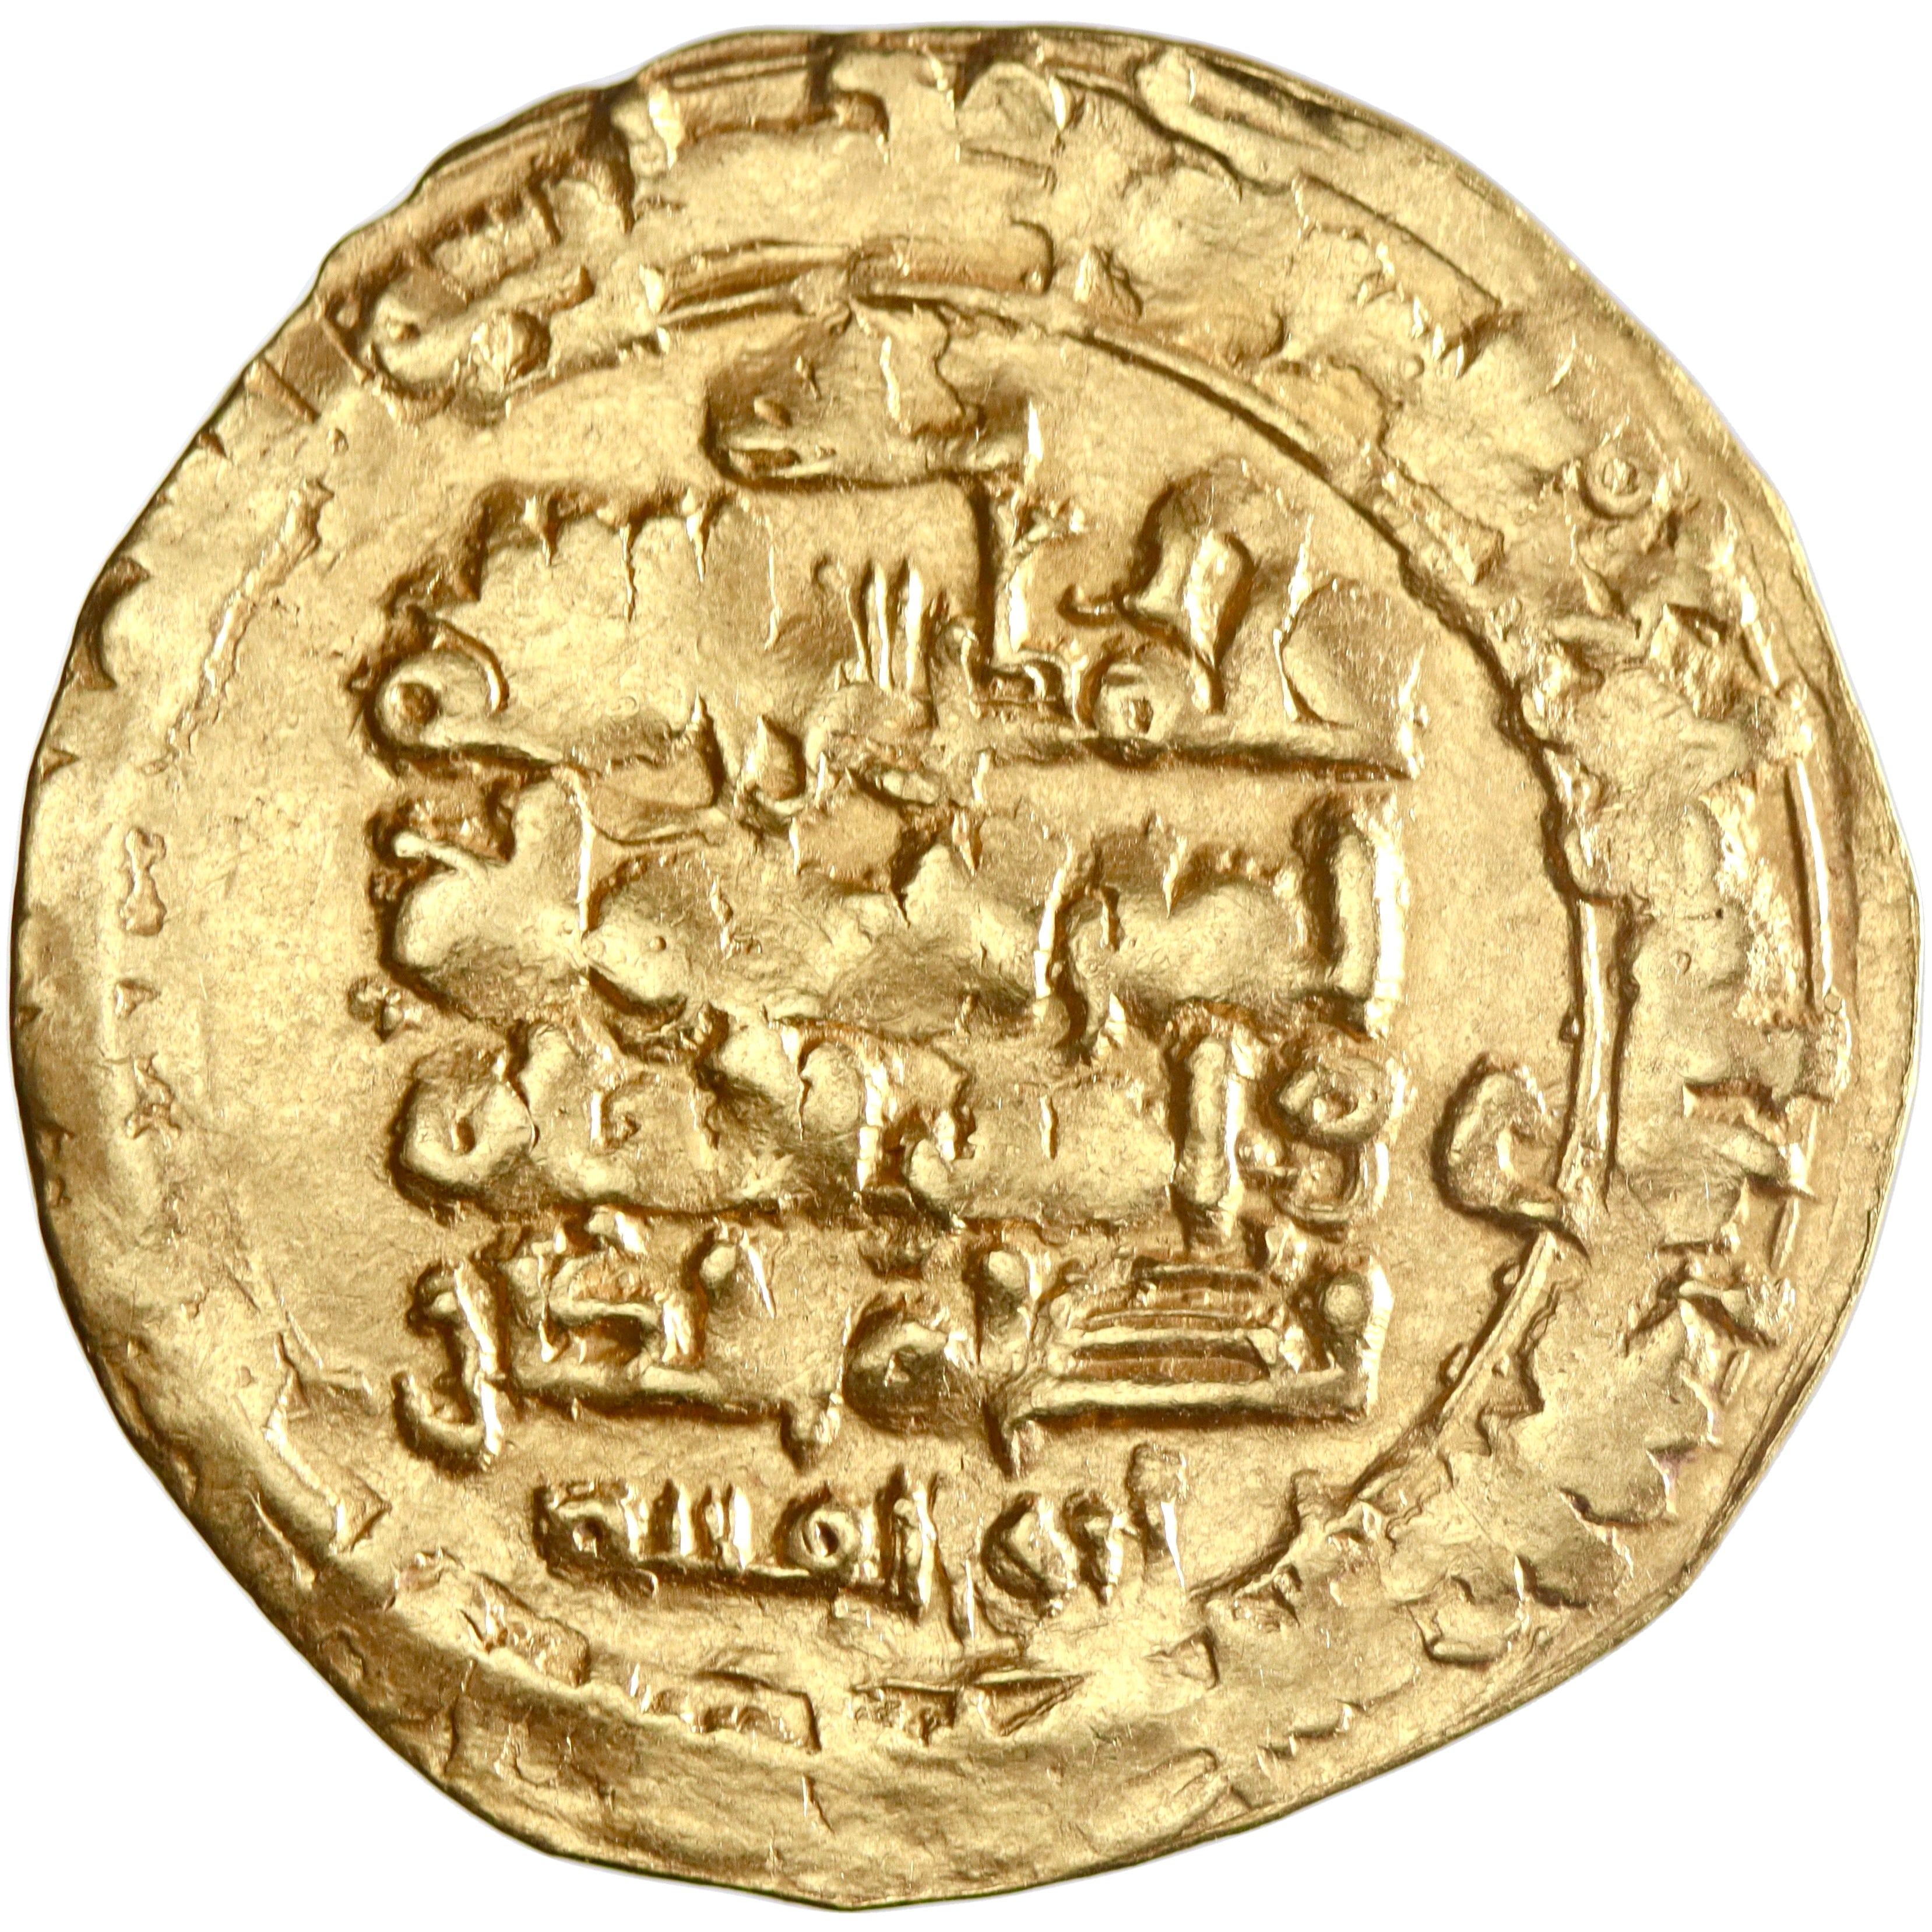 Ghaznavid, Mahmud ibn Sebuktegin, gold dinar, Naysabur (Nishapur) mint, AH 412, citing al-Qadir